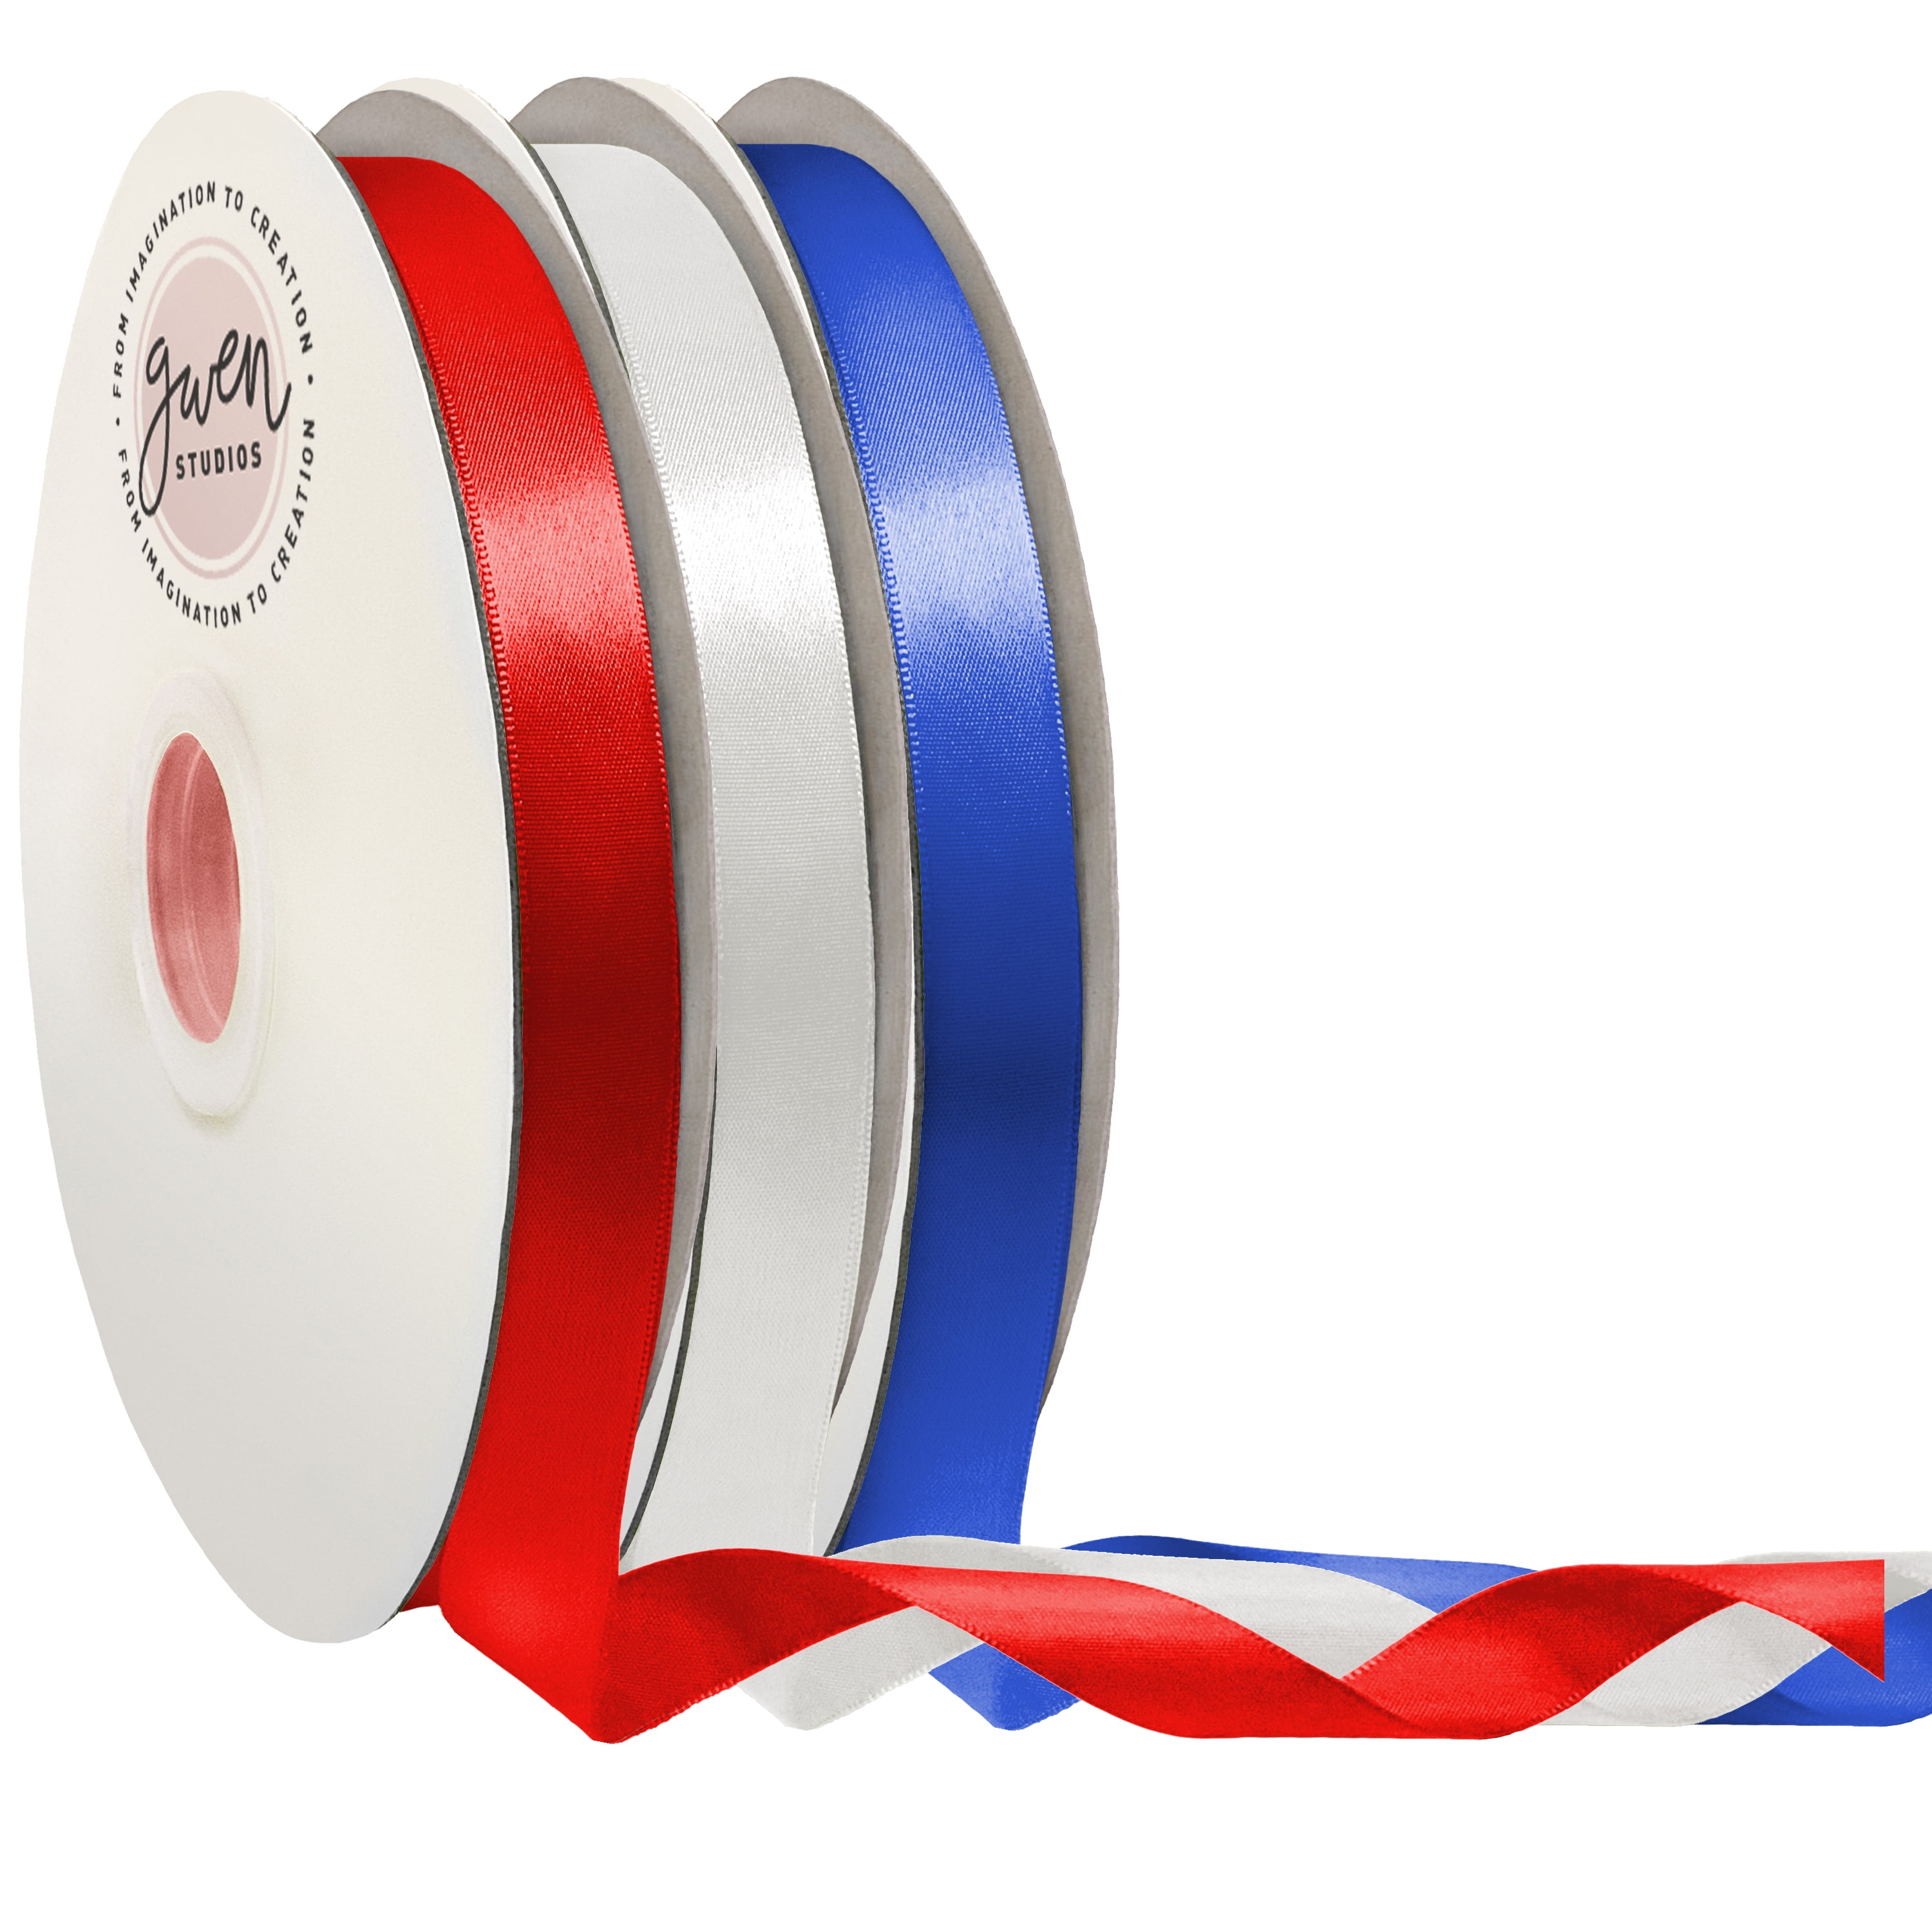 Patriotic Single Face Satin Ribbon Set, Red, White & Blue, 5/8 x 300 Yards  by Gwen Studios